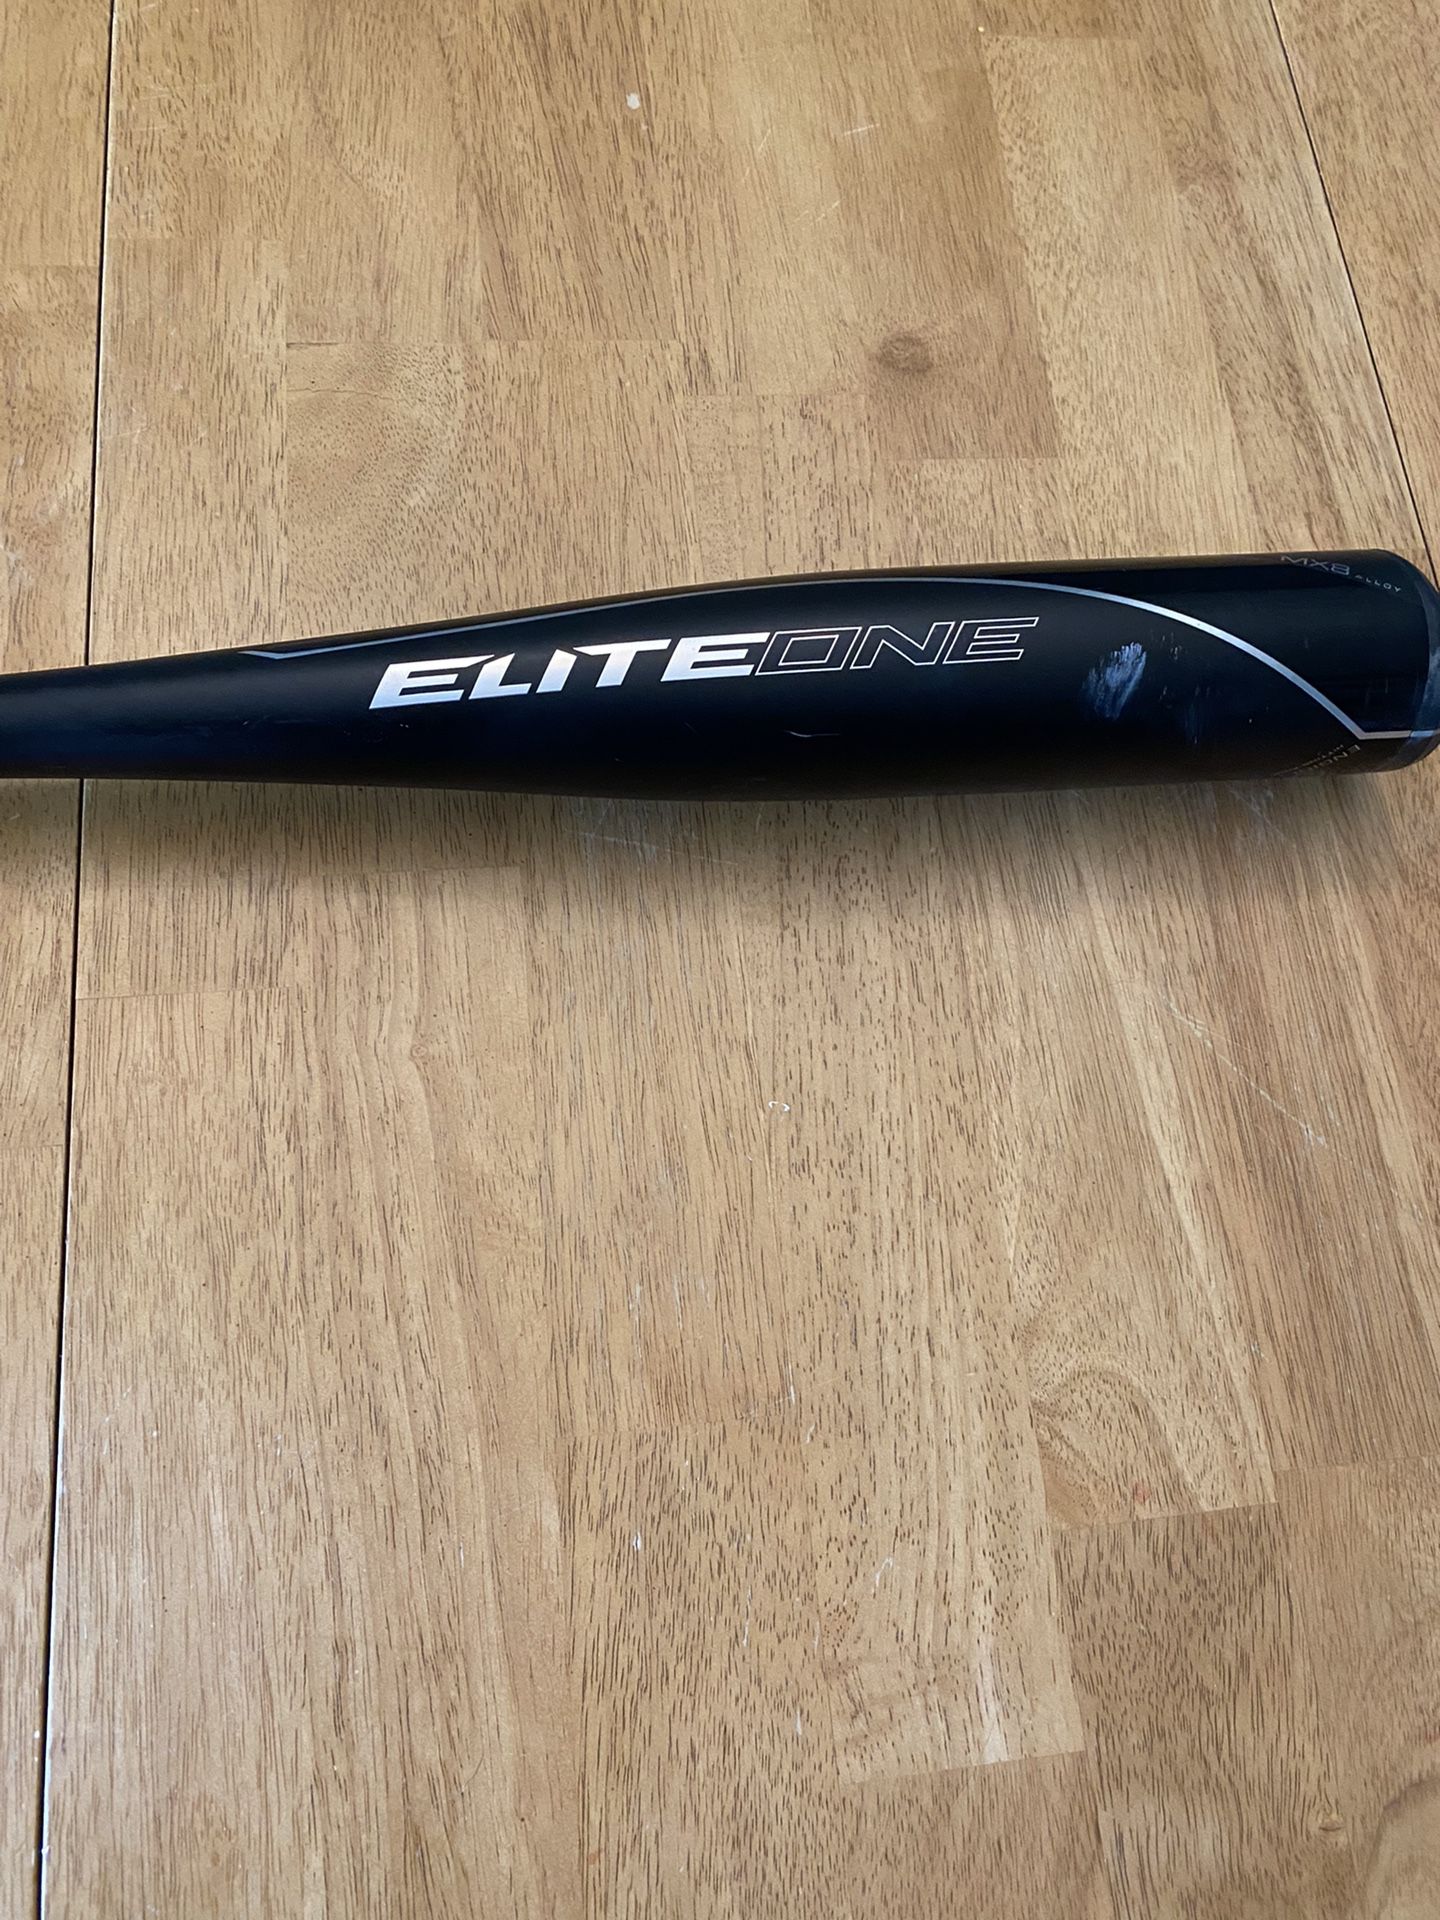 Axe Elite One Baseball Bat